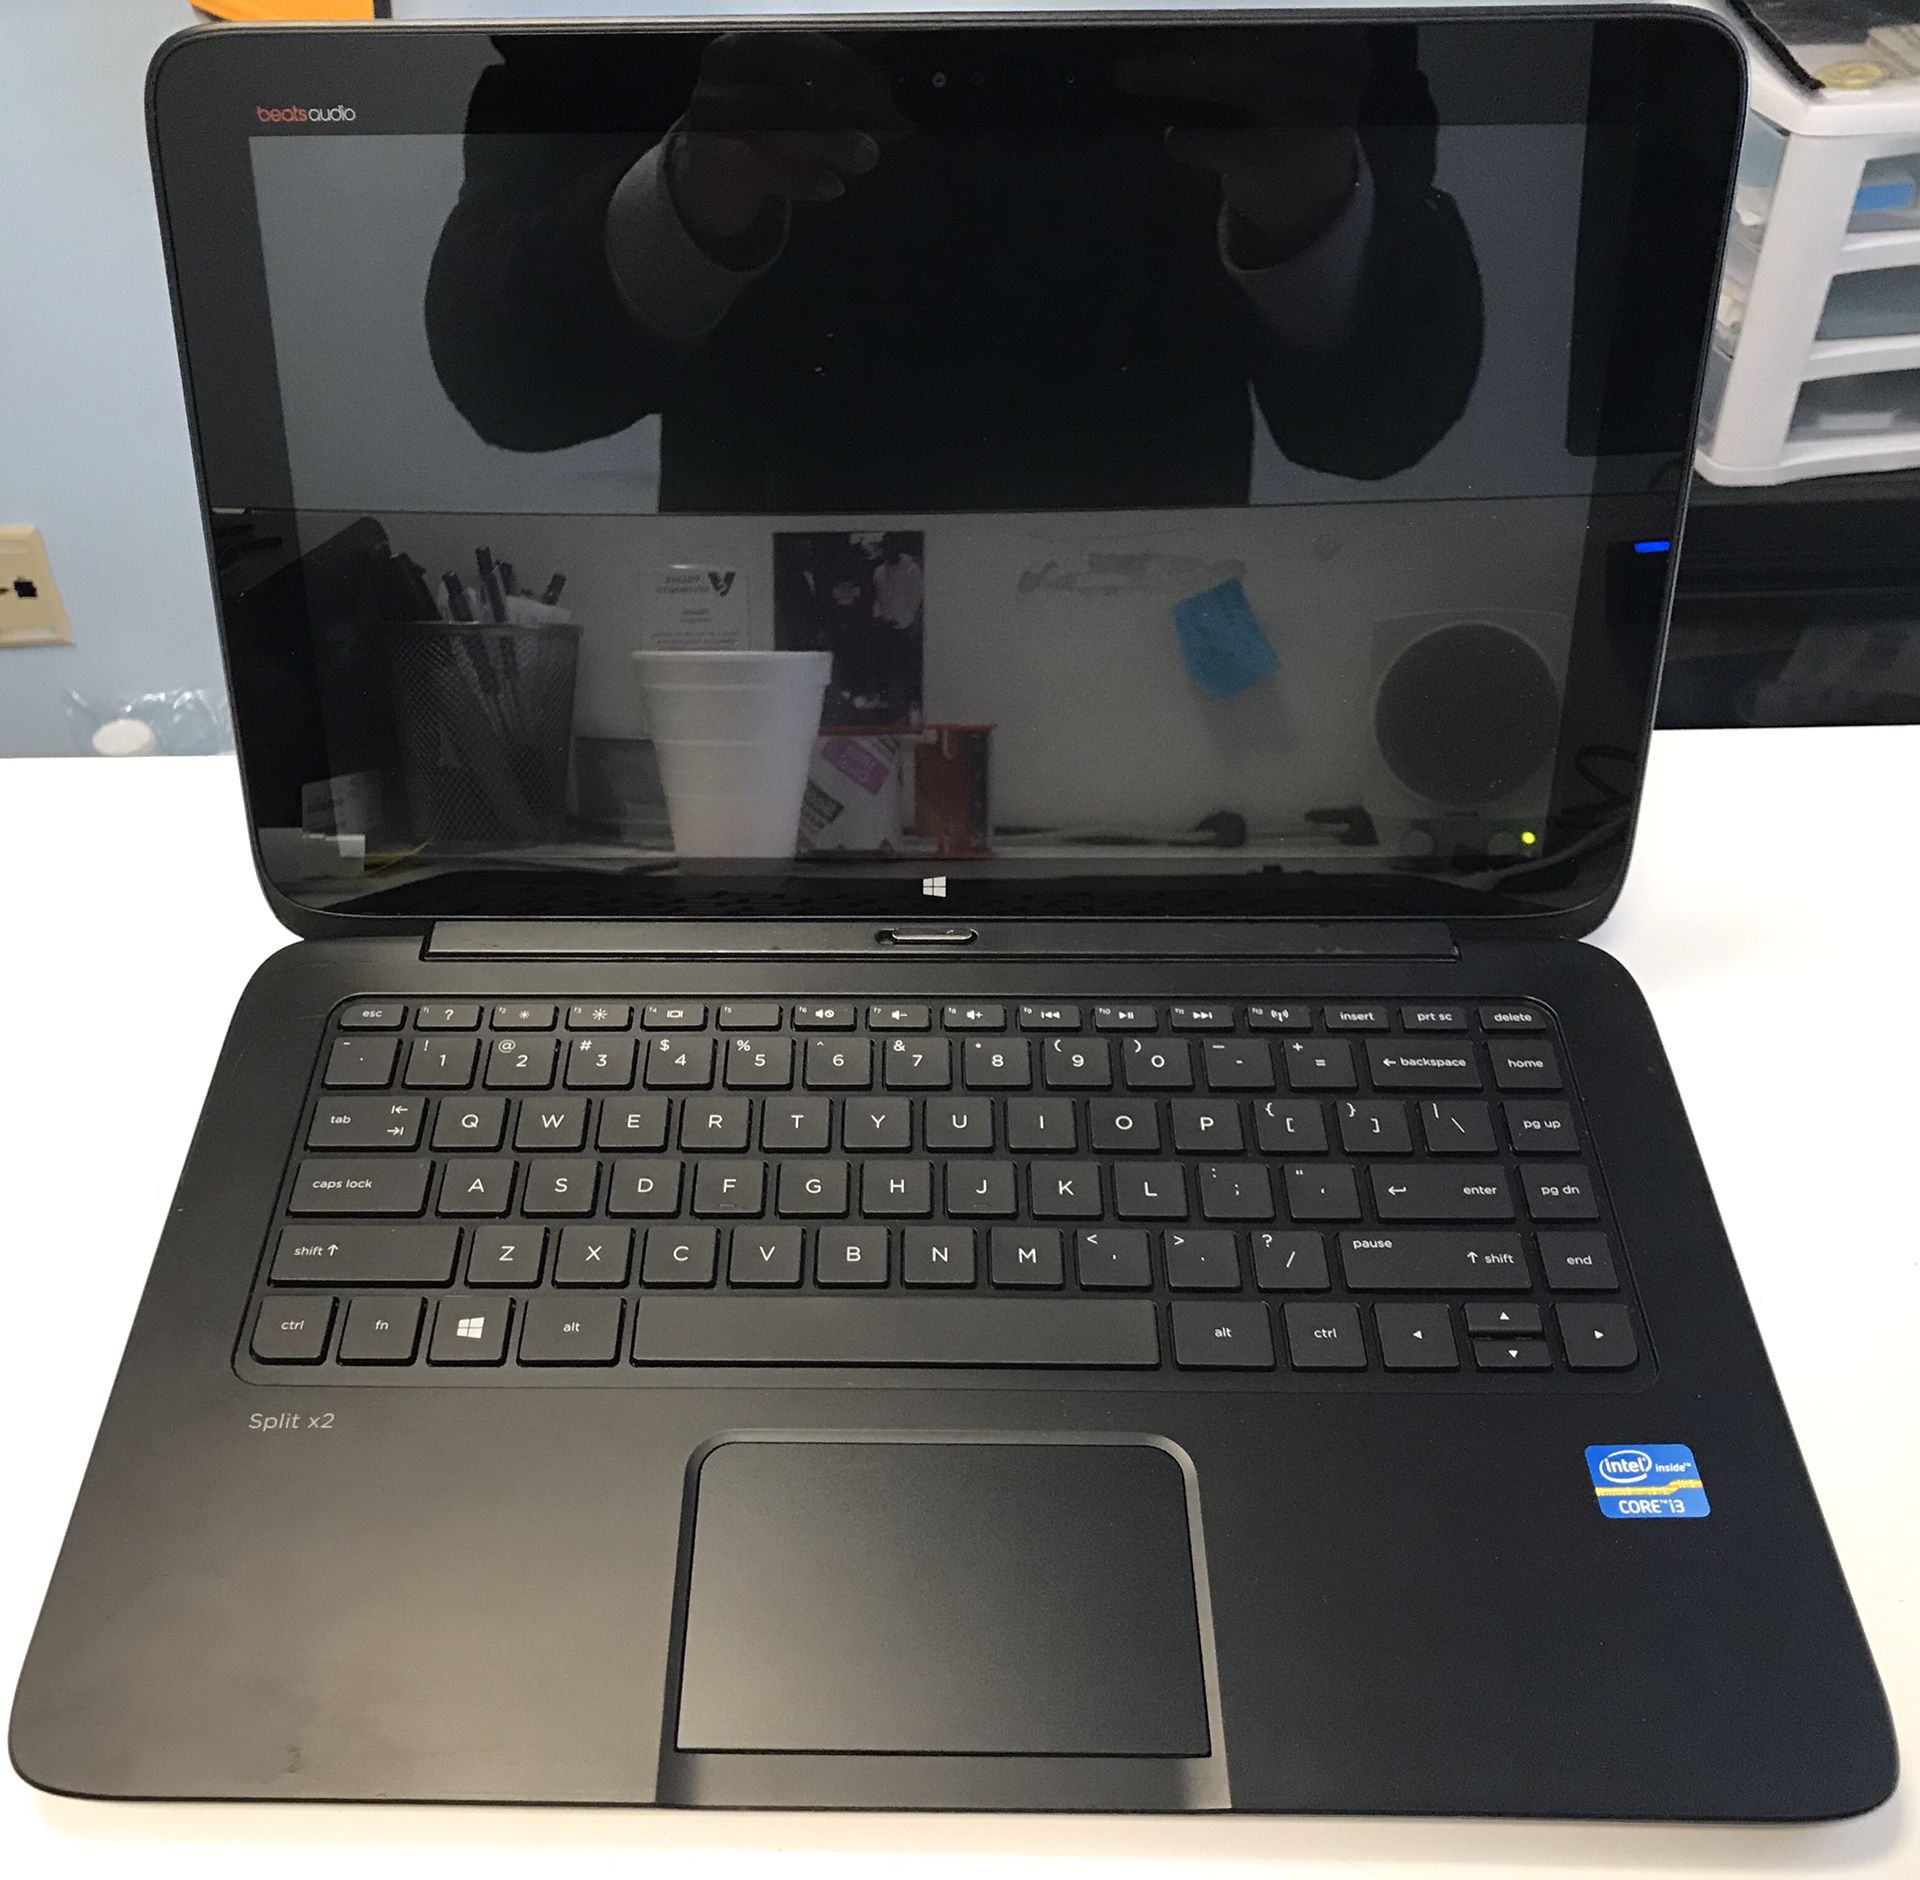 HP split x2 windows laptop / tablet computer